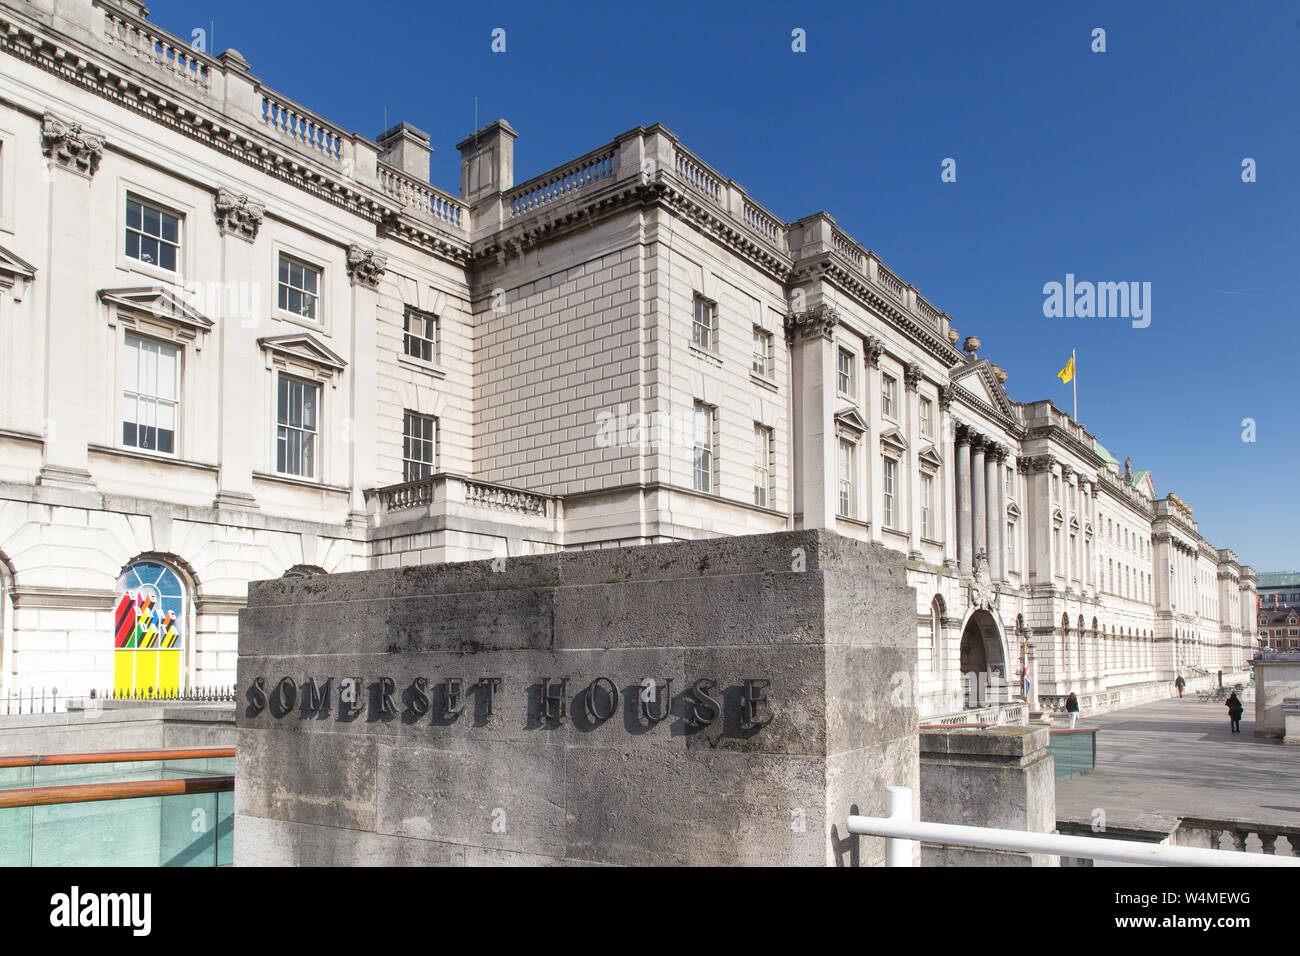 Somerset House Stock Photo